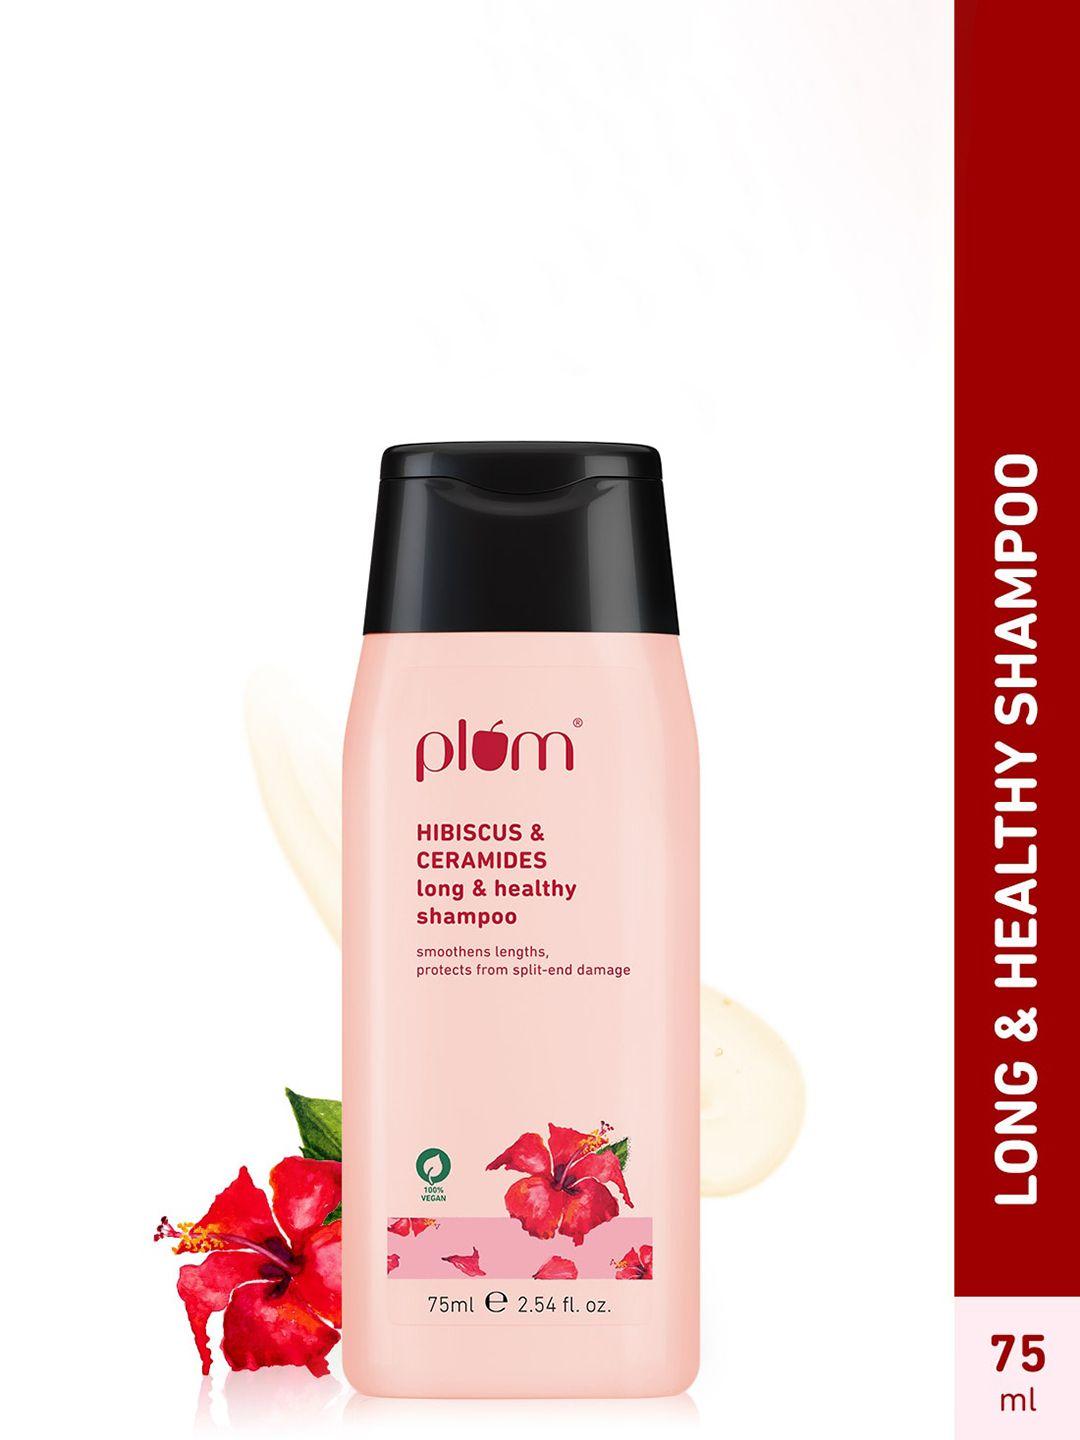 plum hibiscus & ceramides long & healthy shampoo - 75ml